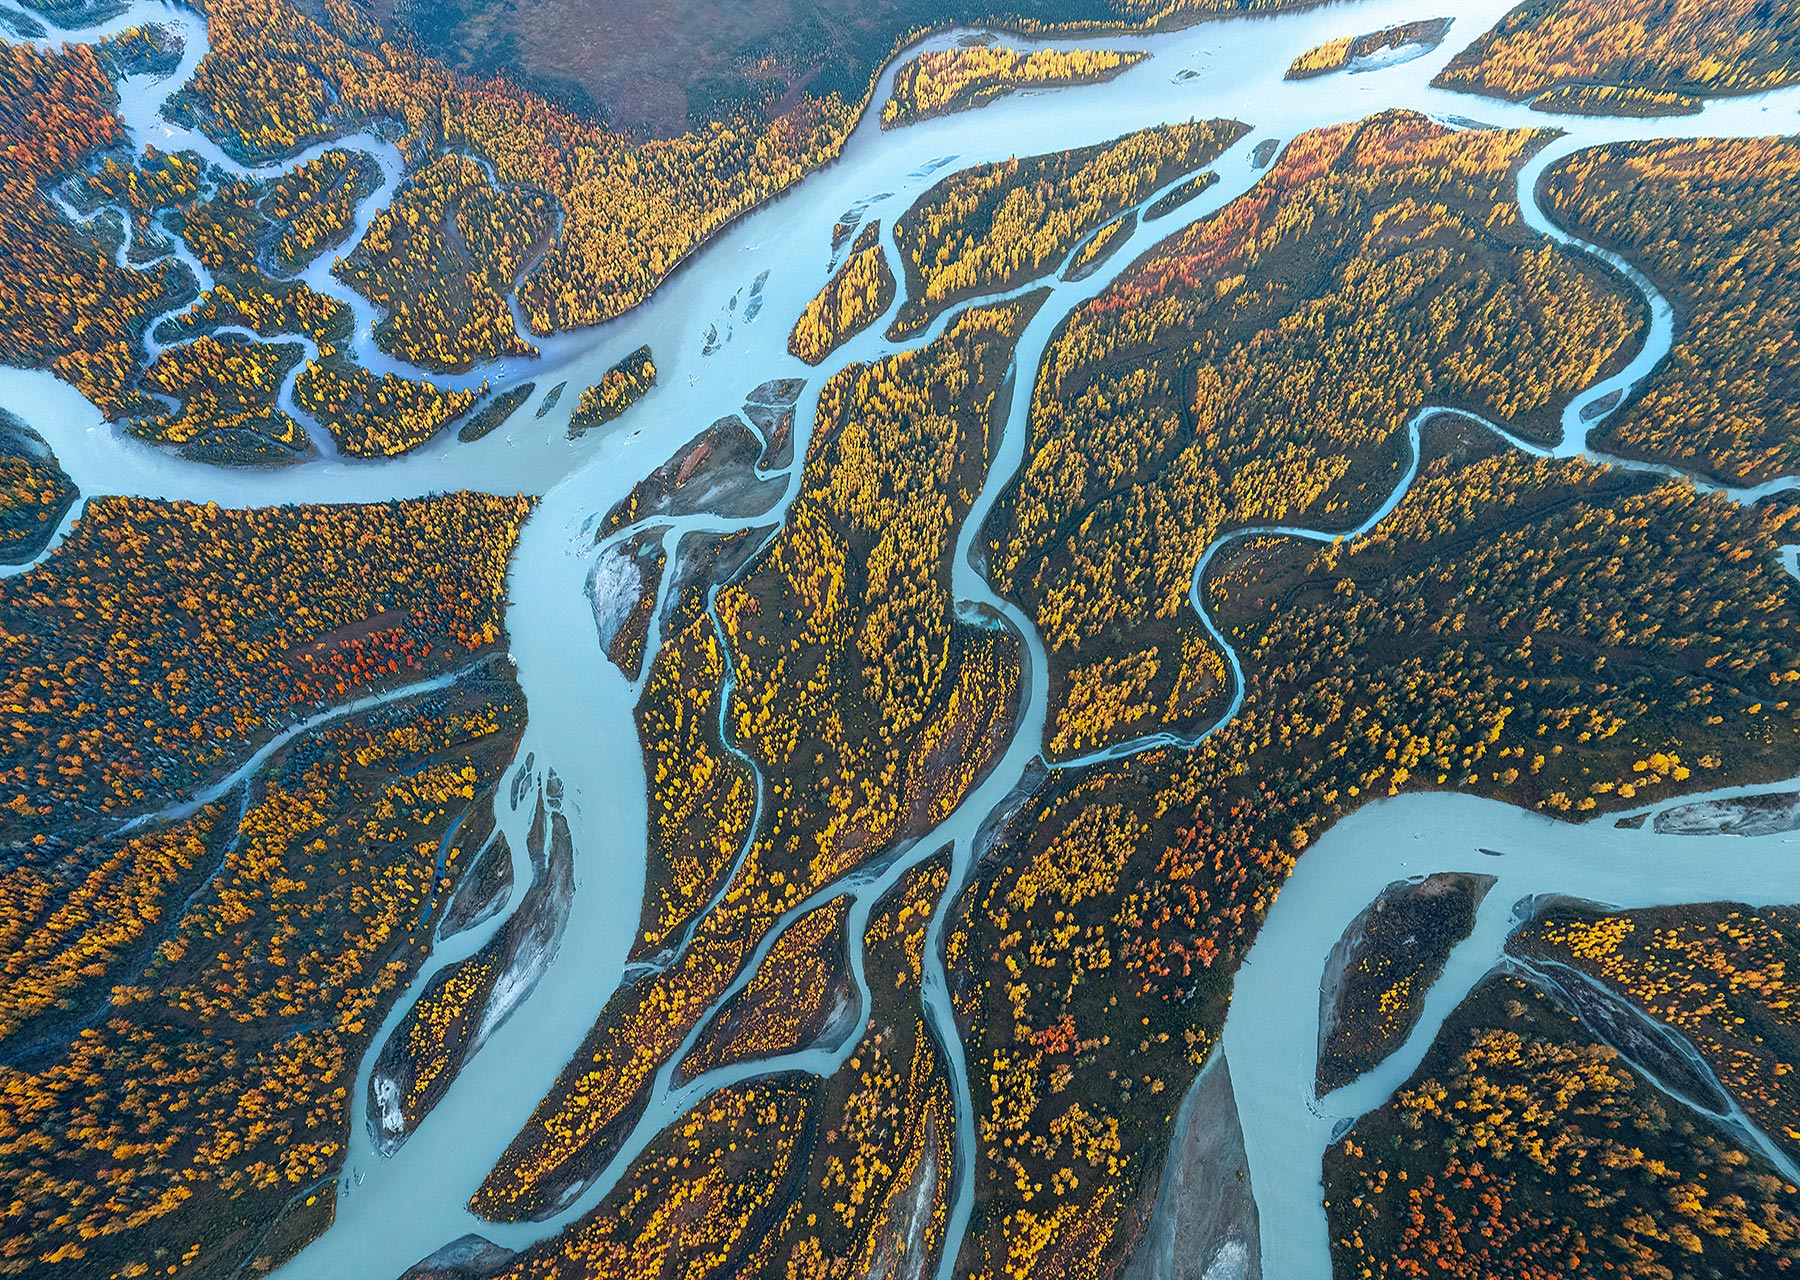 Glacial blue rivers winding through the fall colors below, Alaska